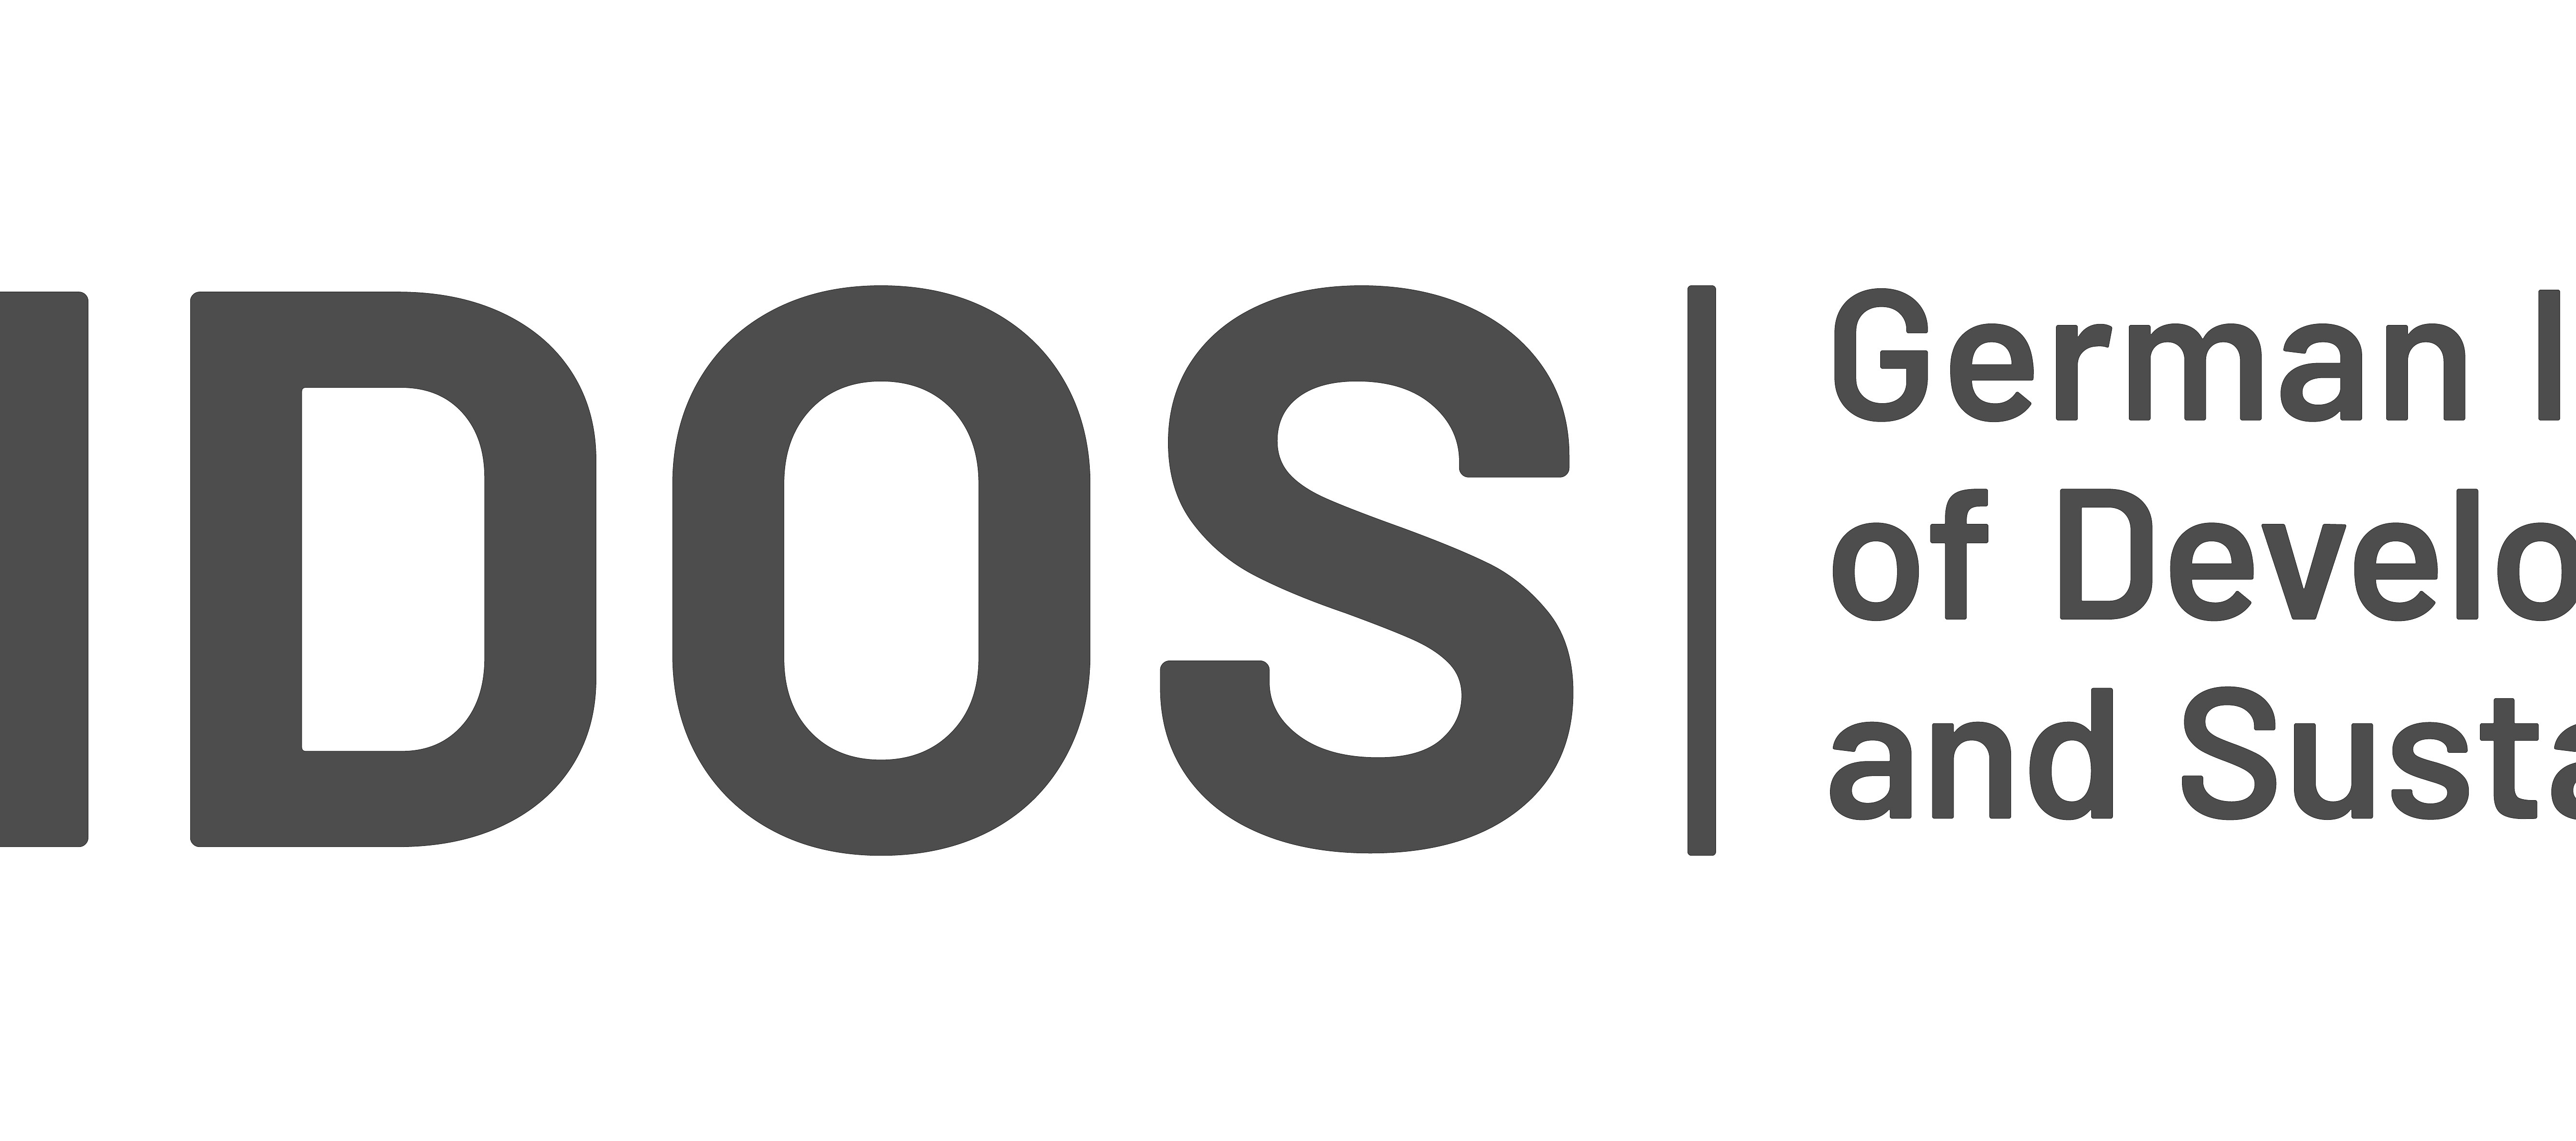 IDOS Logo, German Institute of Development and Sustainability